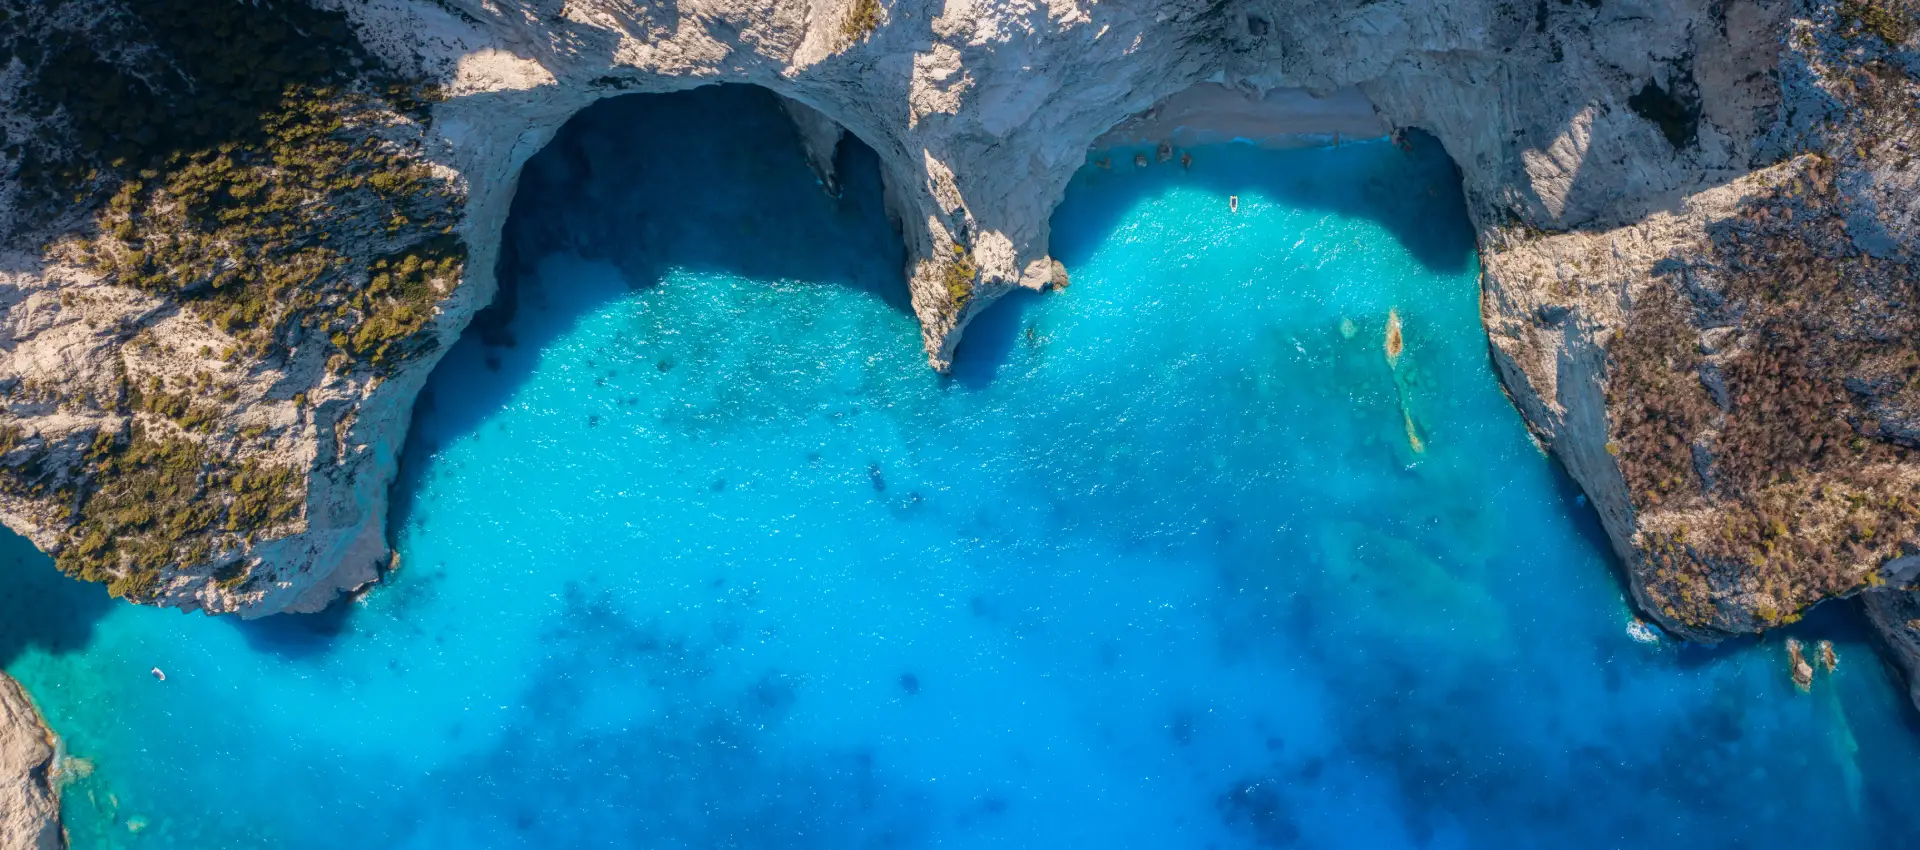 blue-grotto-malta.webp